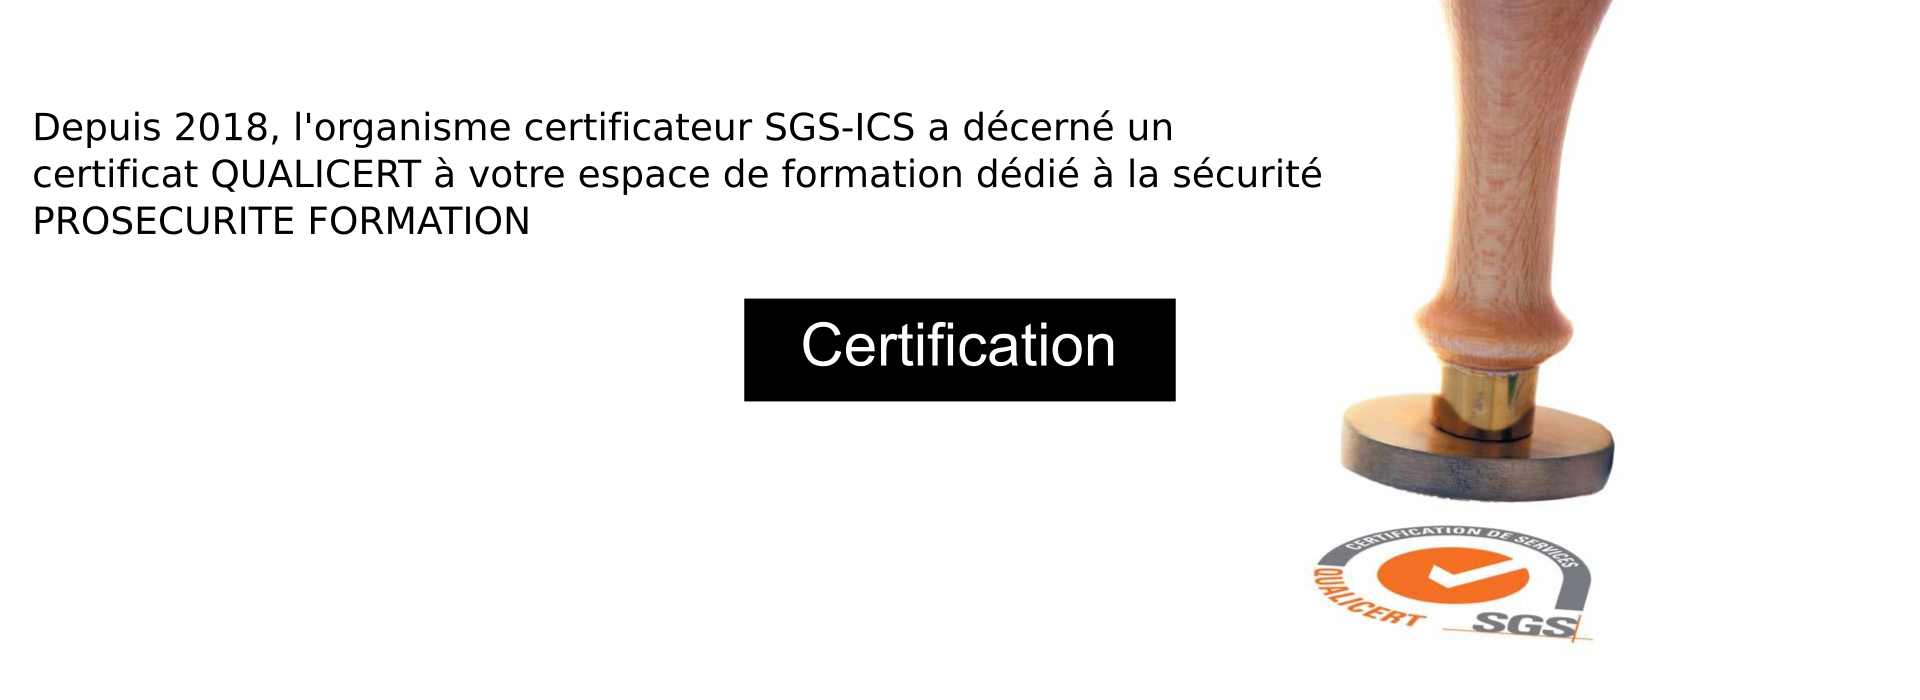 certification qualicert